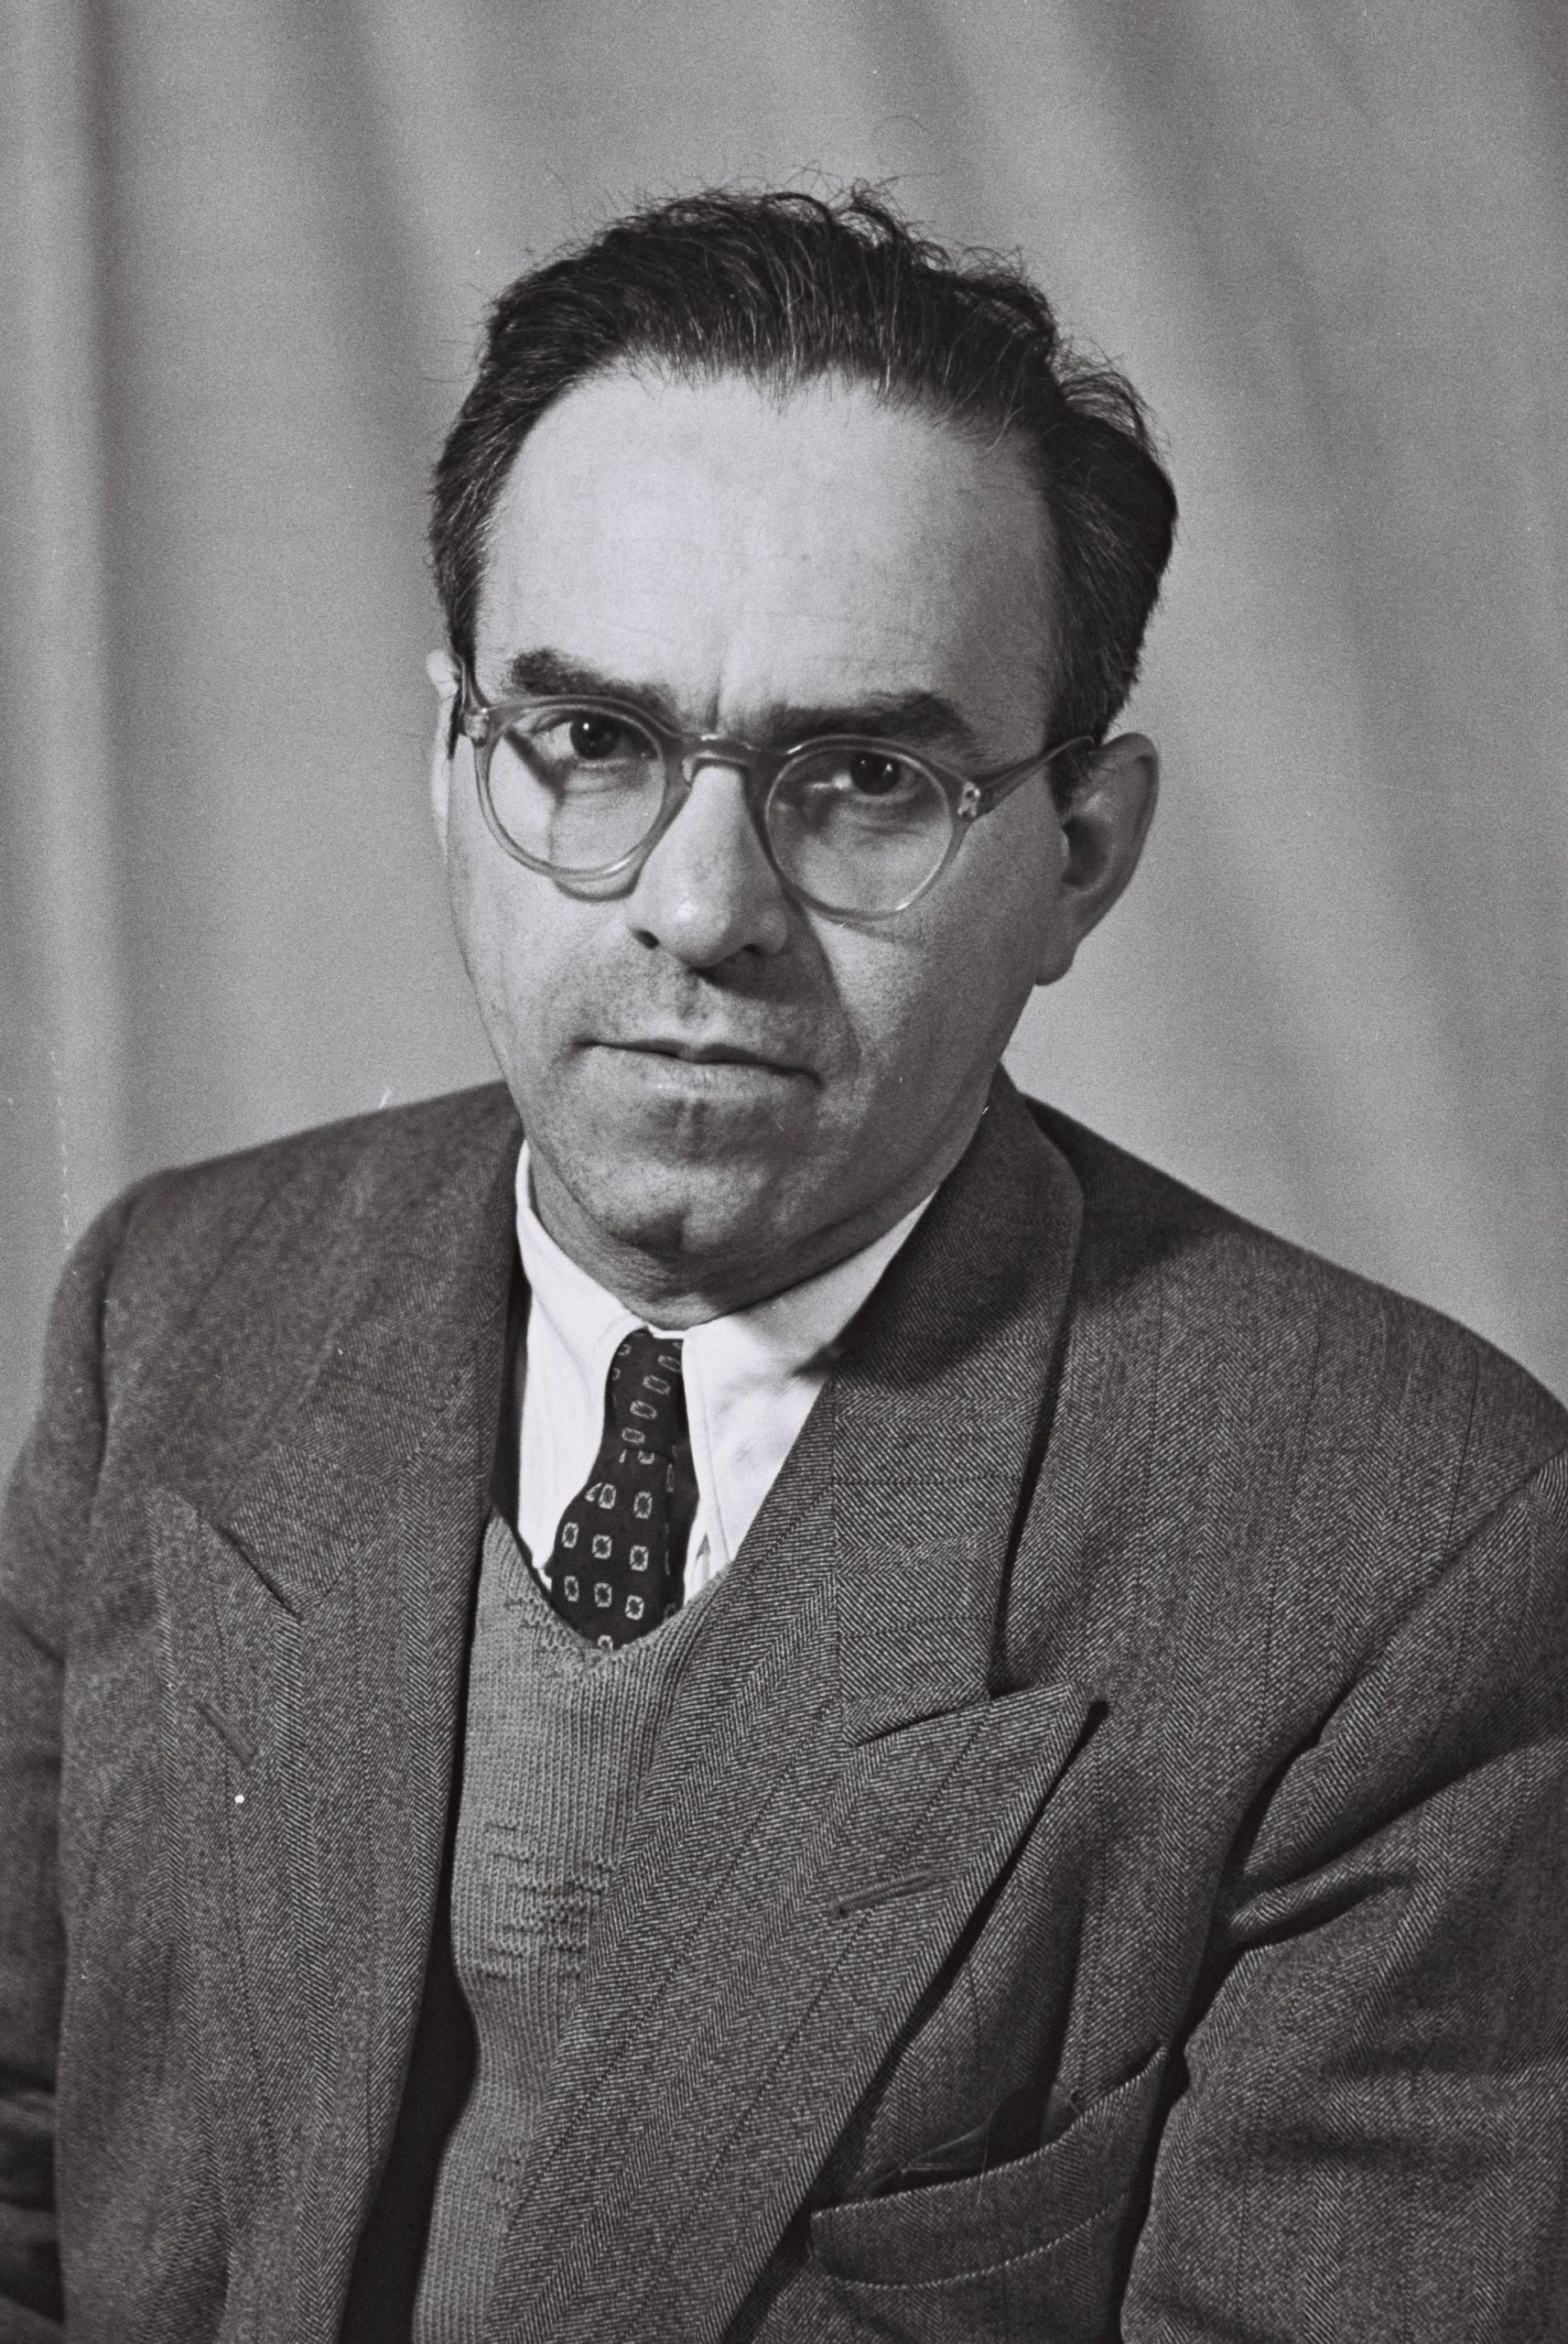 Rabbi Zerach Warhaftig, 1906-2002